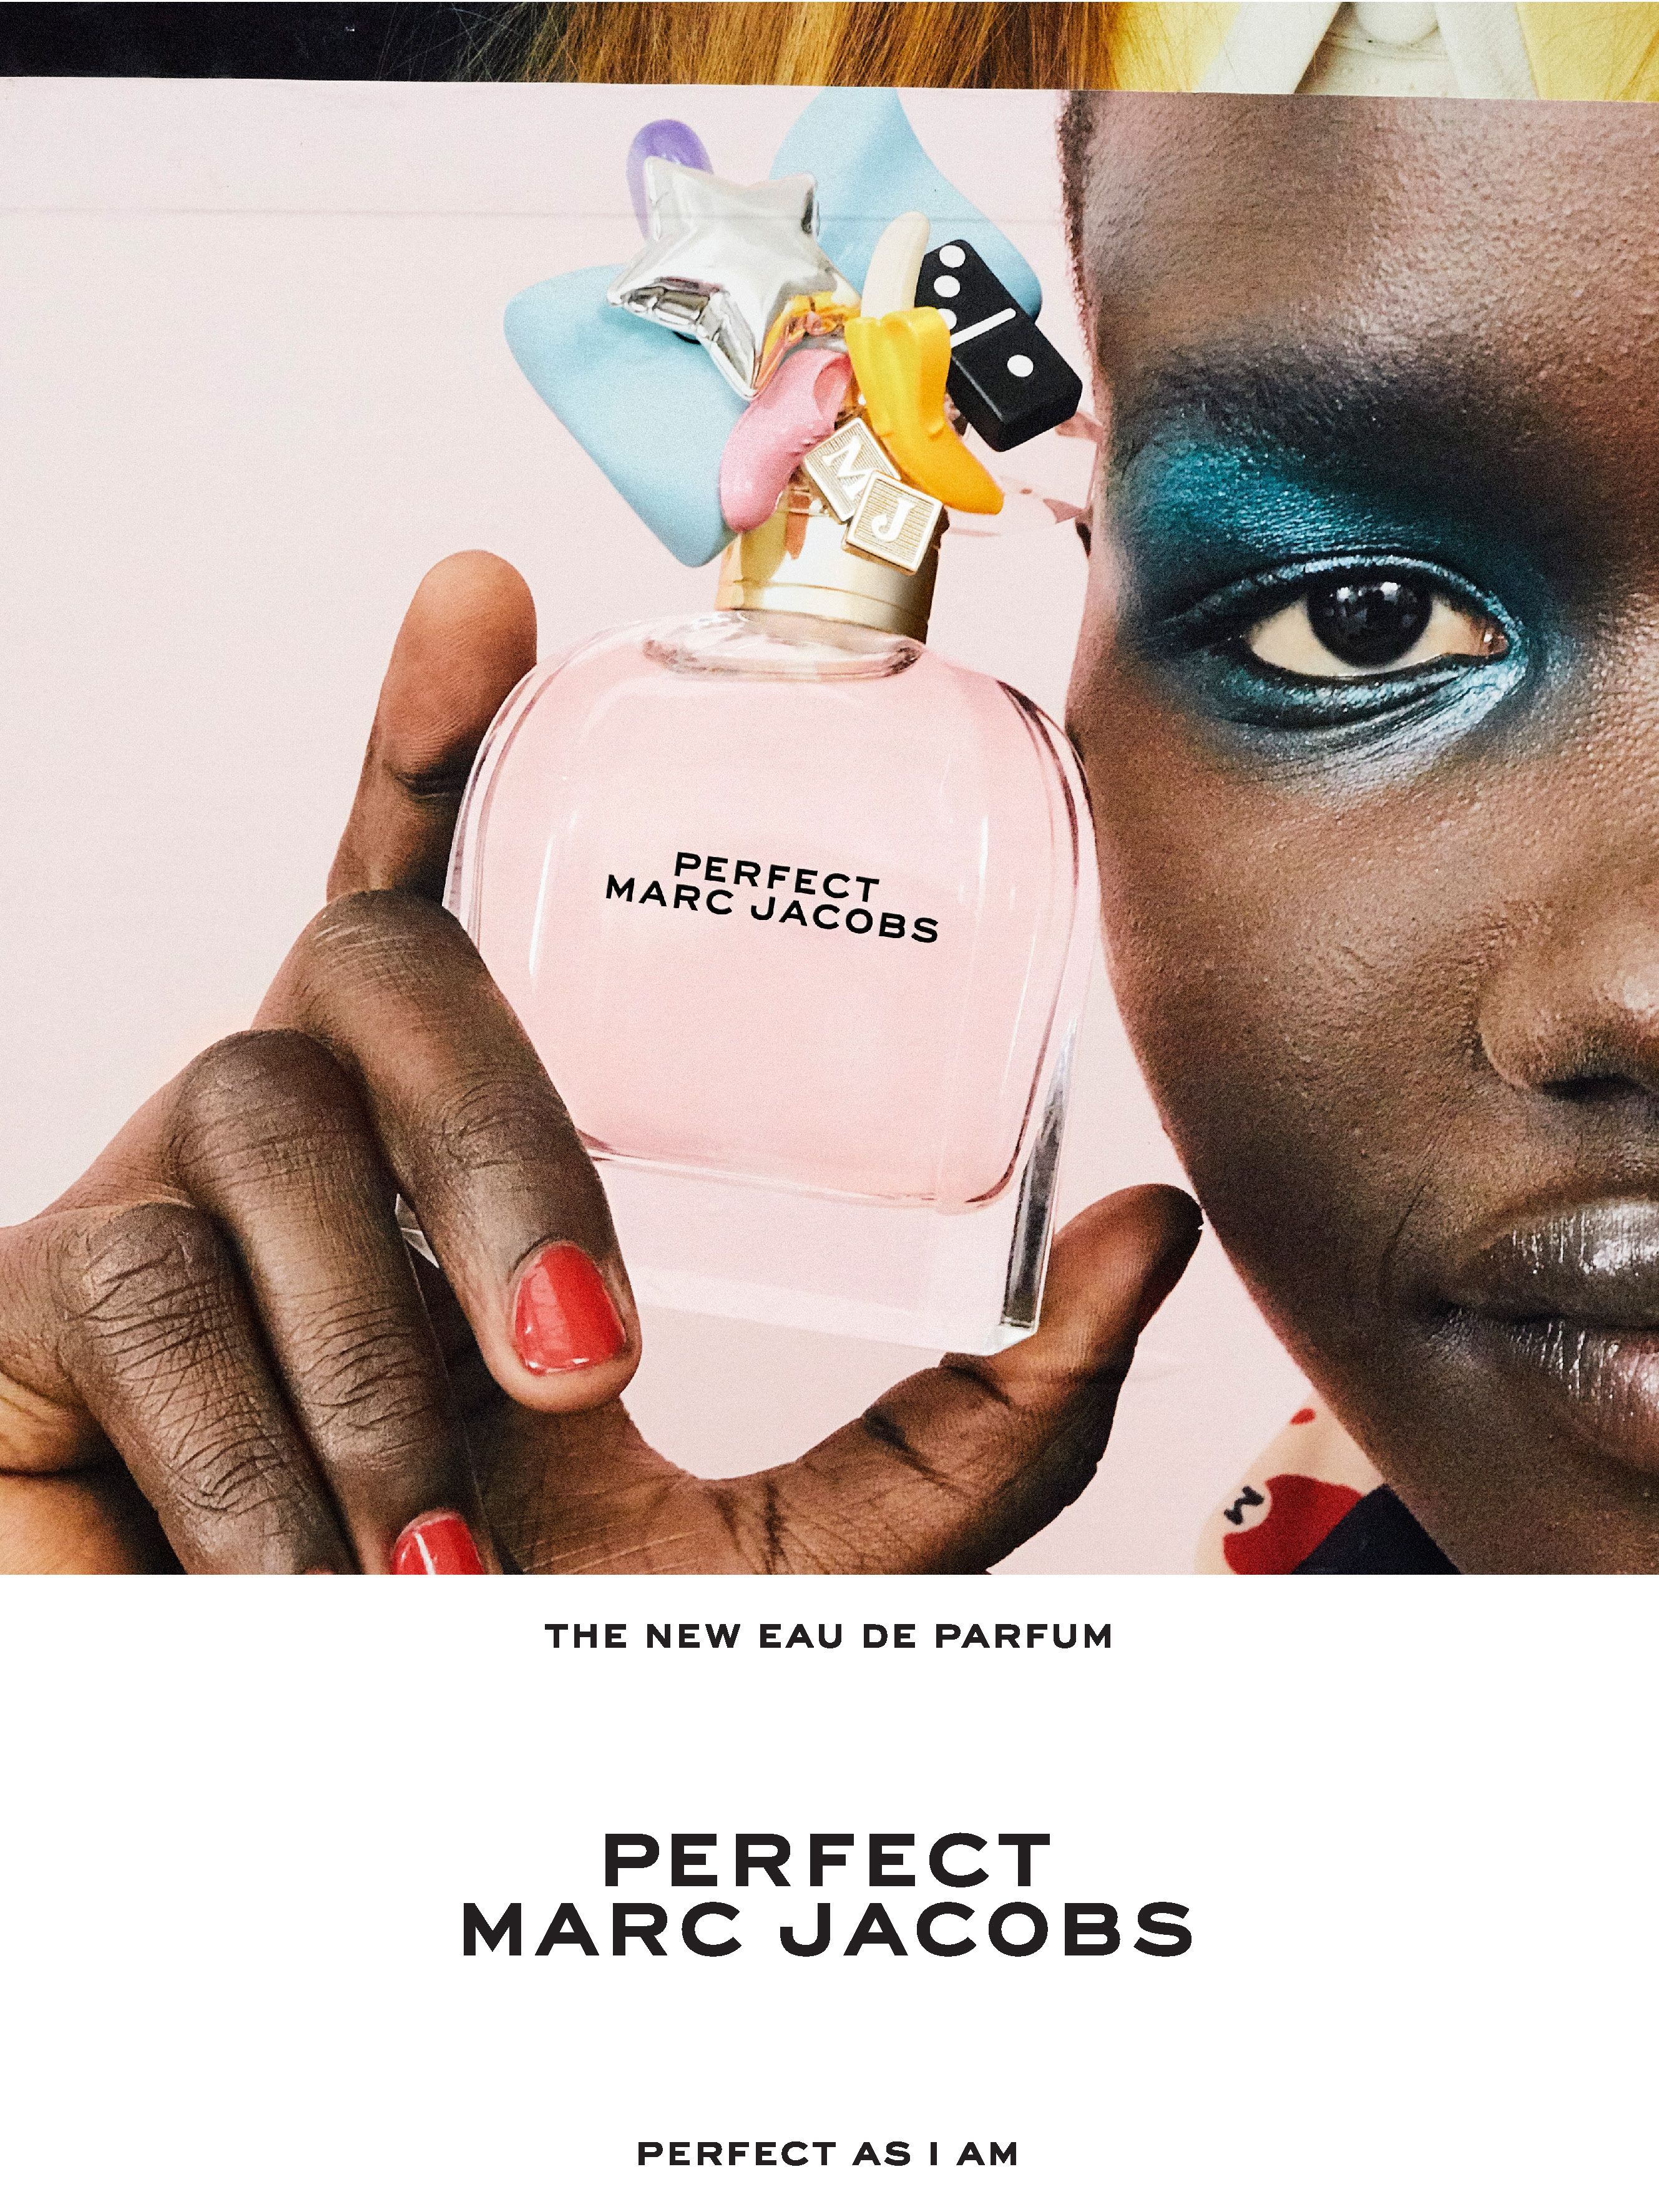 Marc Jacobs New Perfume Celebrates The Self